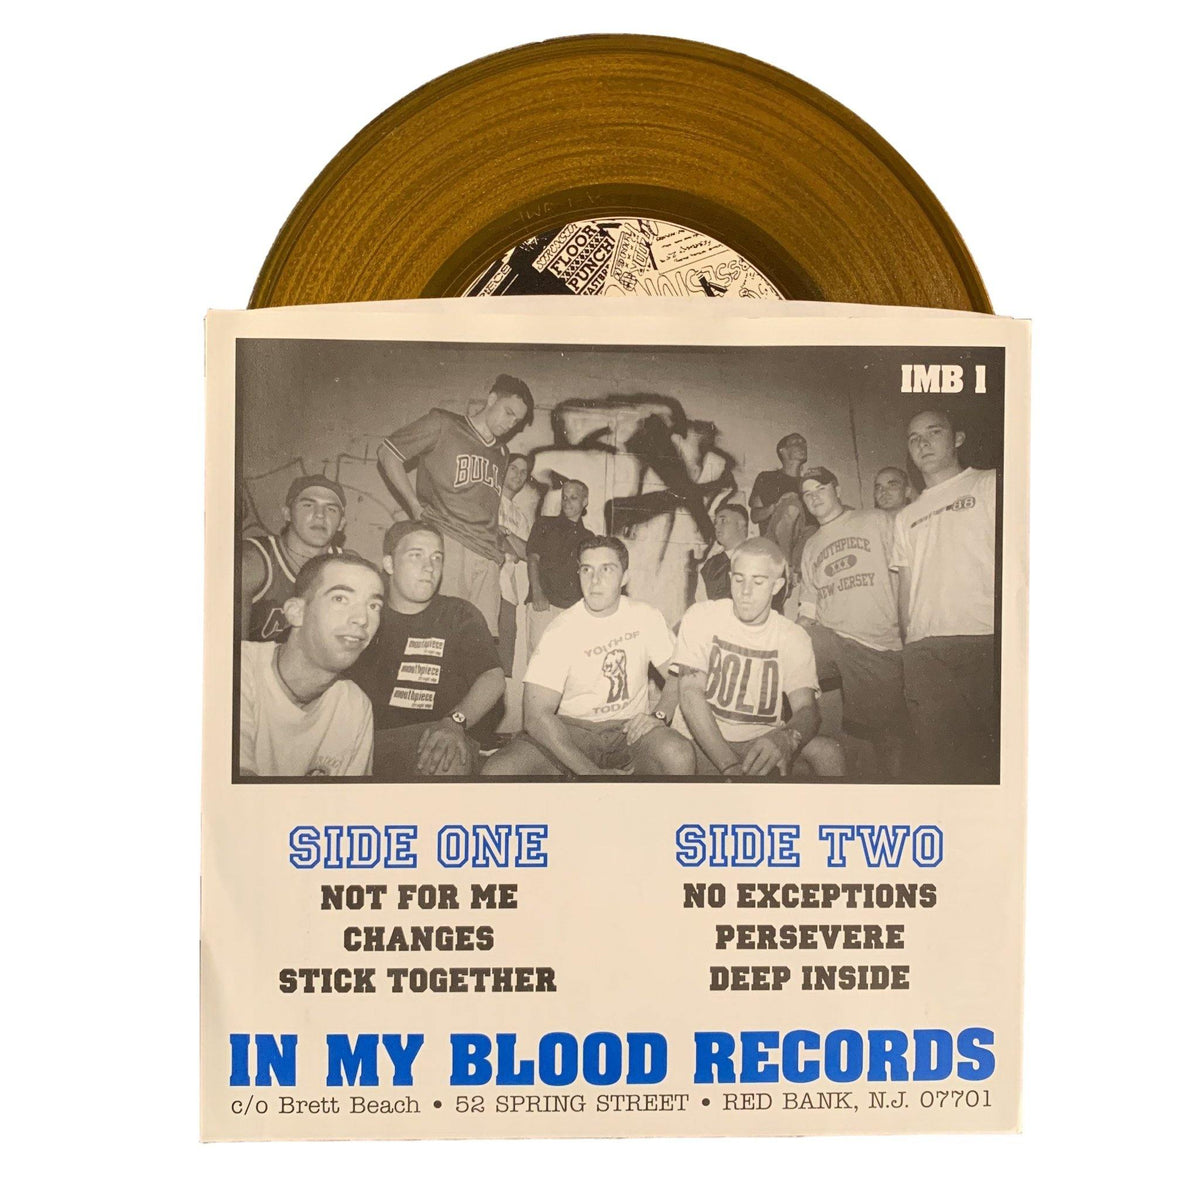 Floorpunch “Division One Champs” Gold Vinyl - jointcustodydc